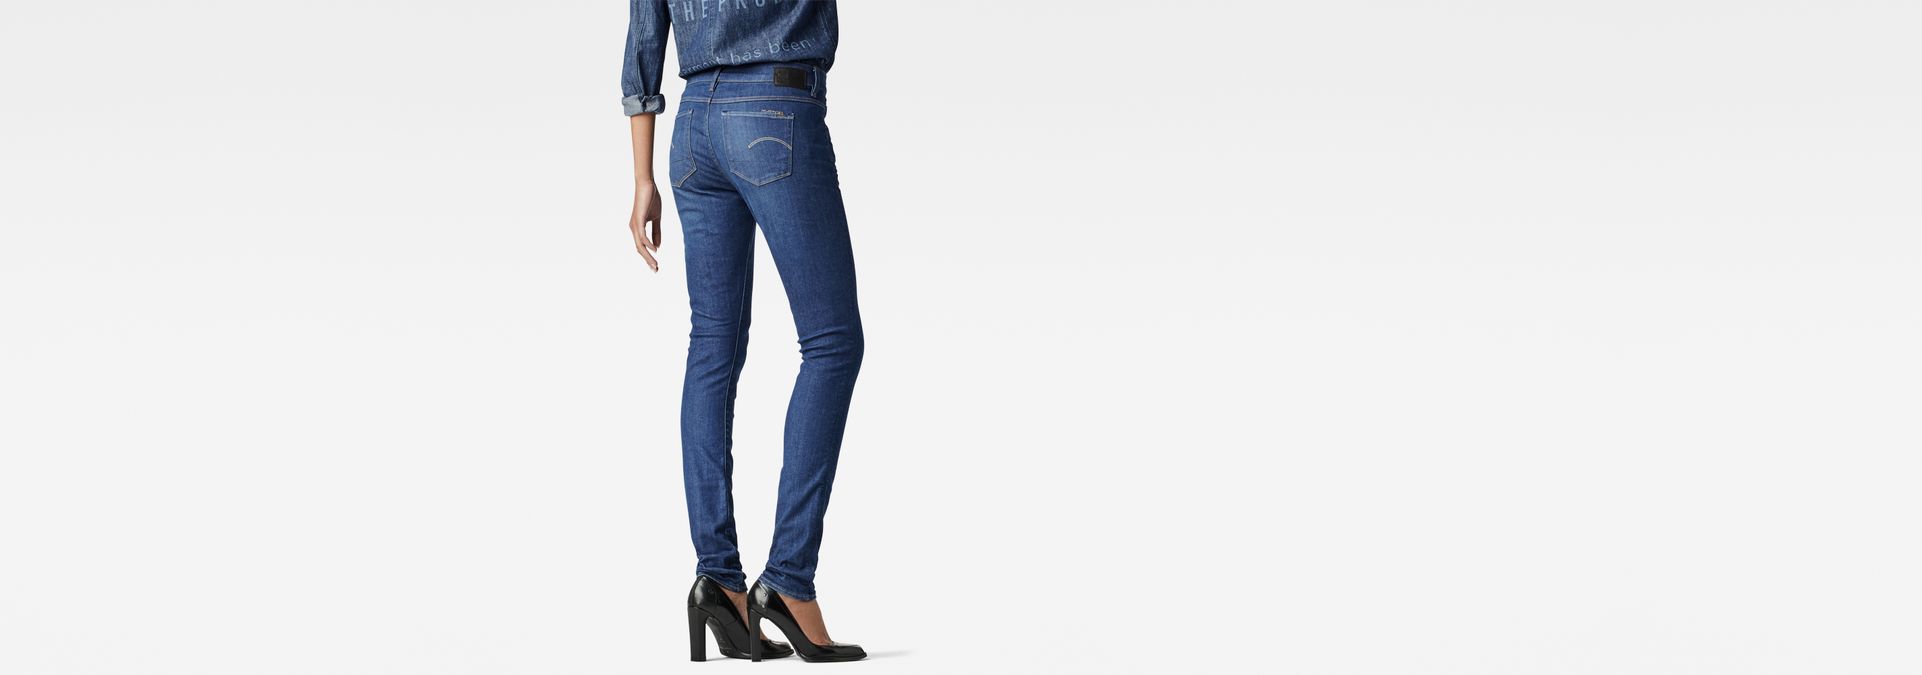 g star 3301 contour high skinny jeans